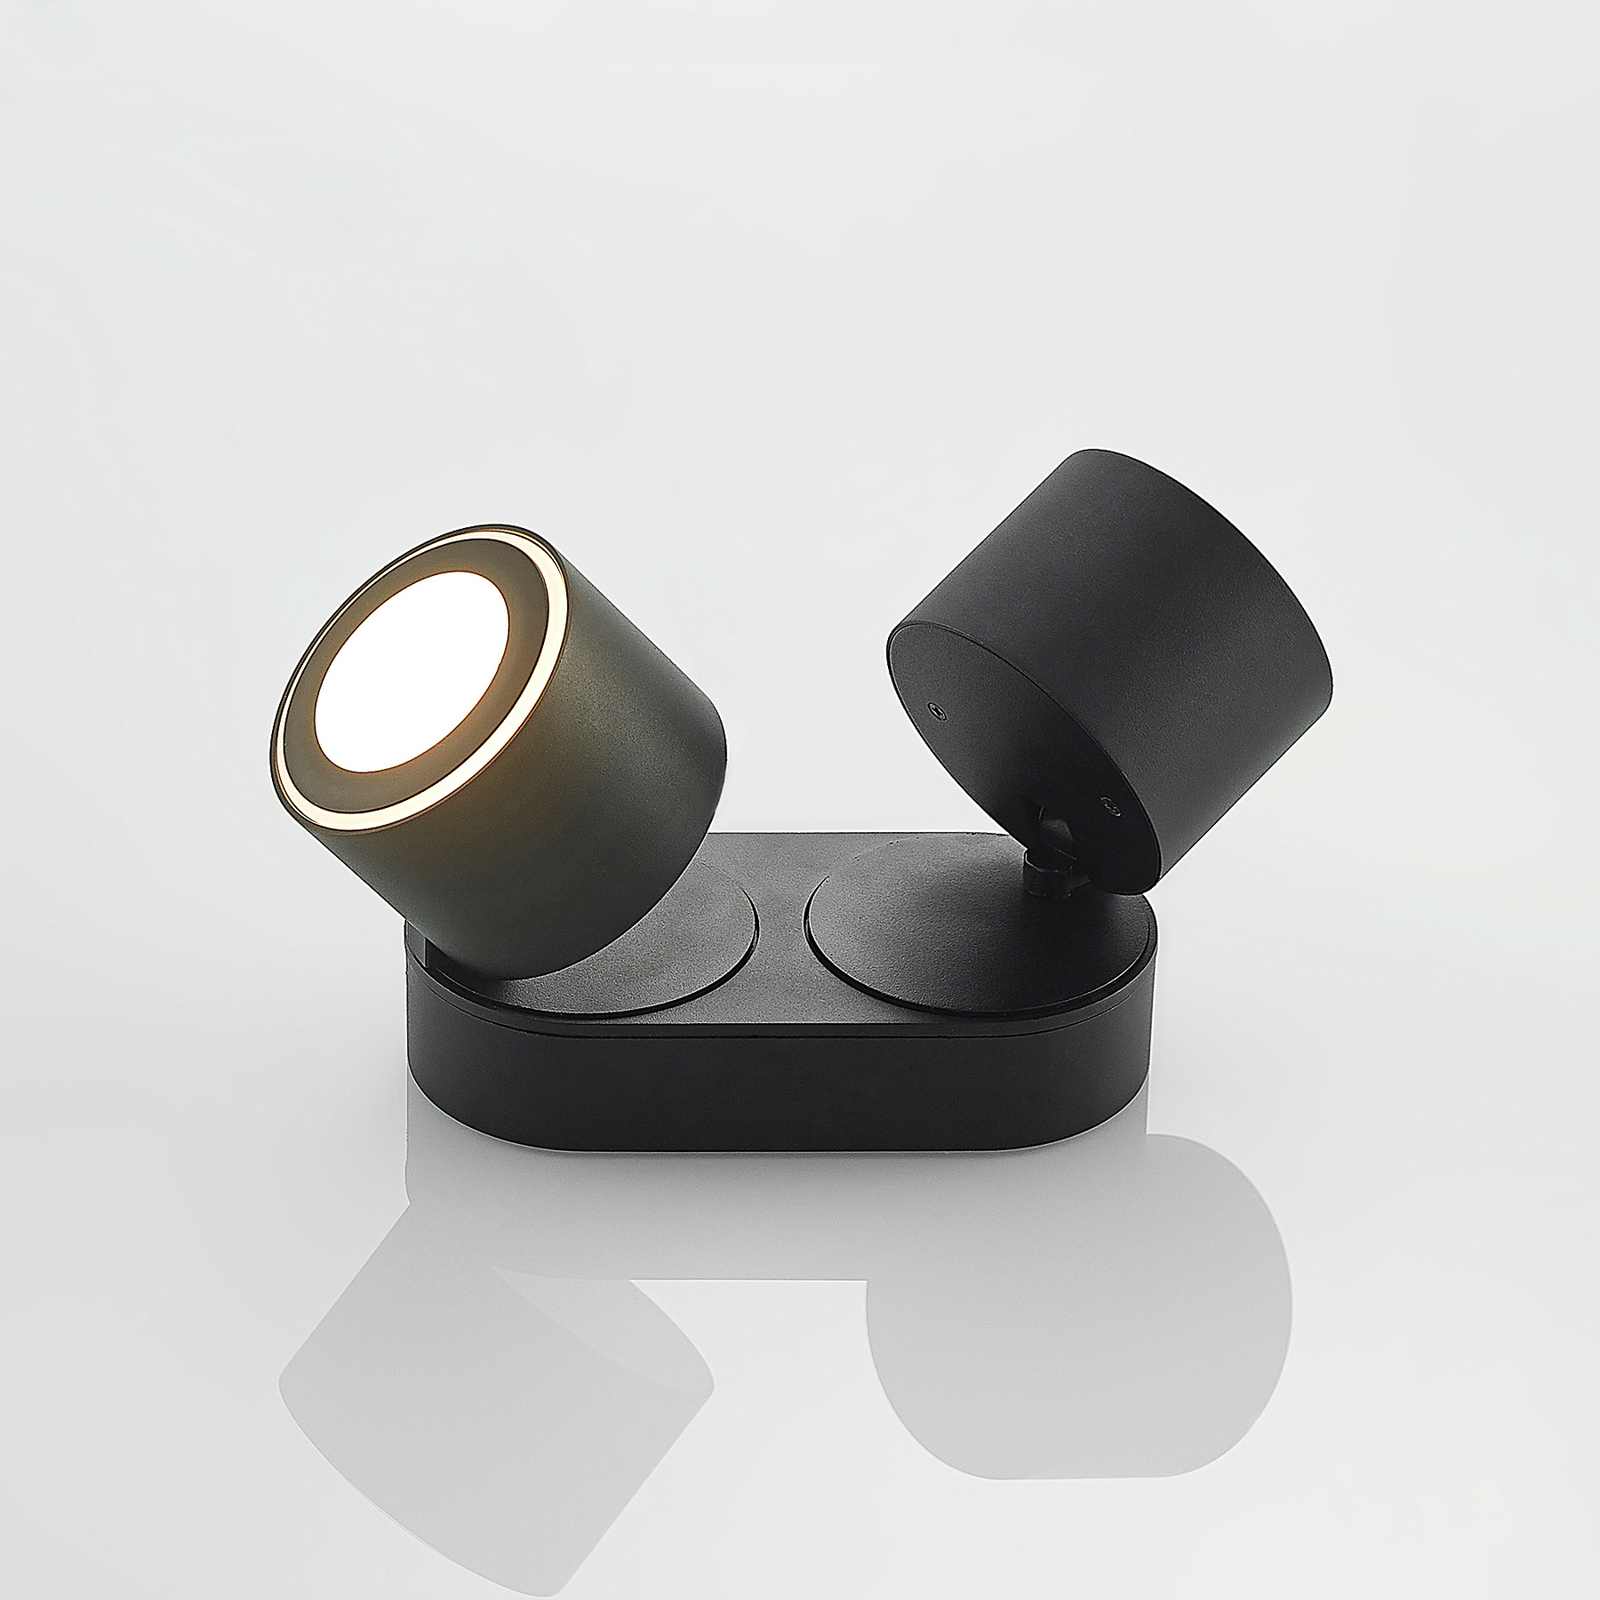 Lindby Lowie LED-spotlight, 2 lampor, svart